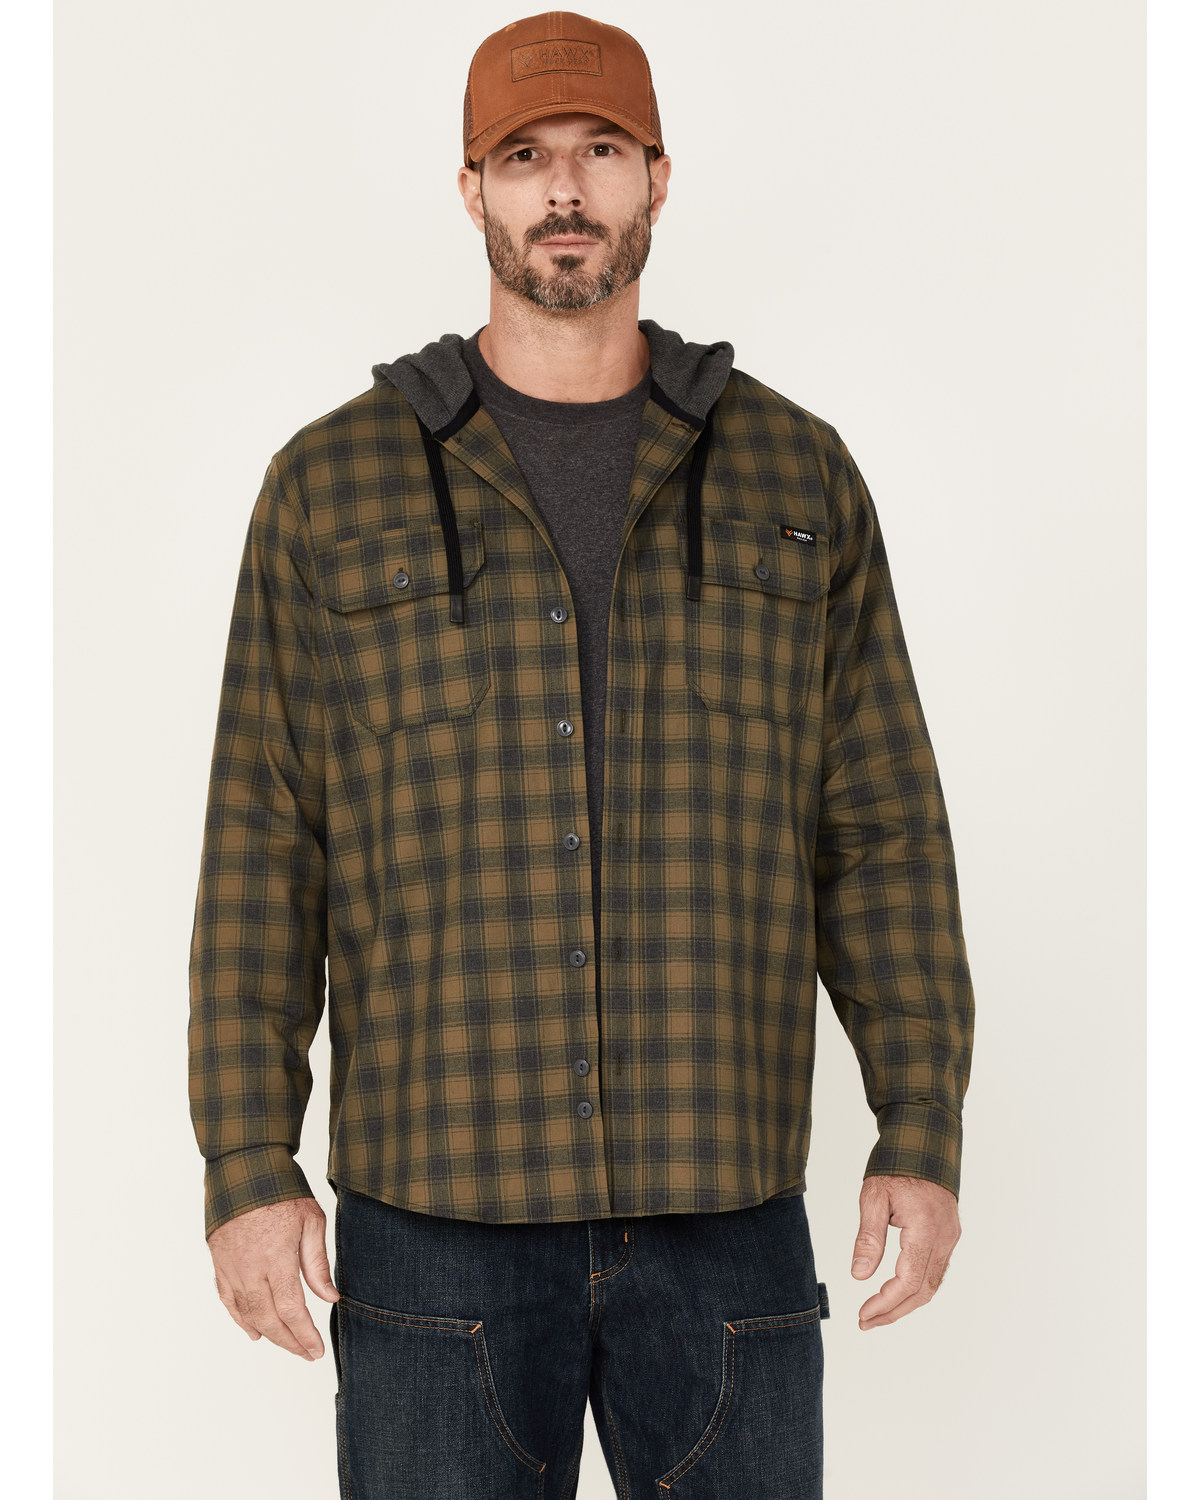 Hawx Men's Plaid Print Robertson Long Sleeve Button Down Hooded Work Flannel Shirt